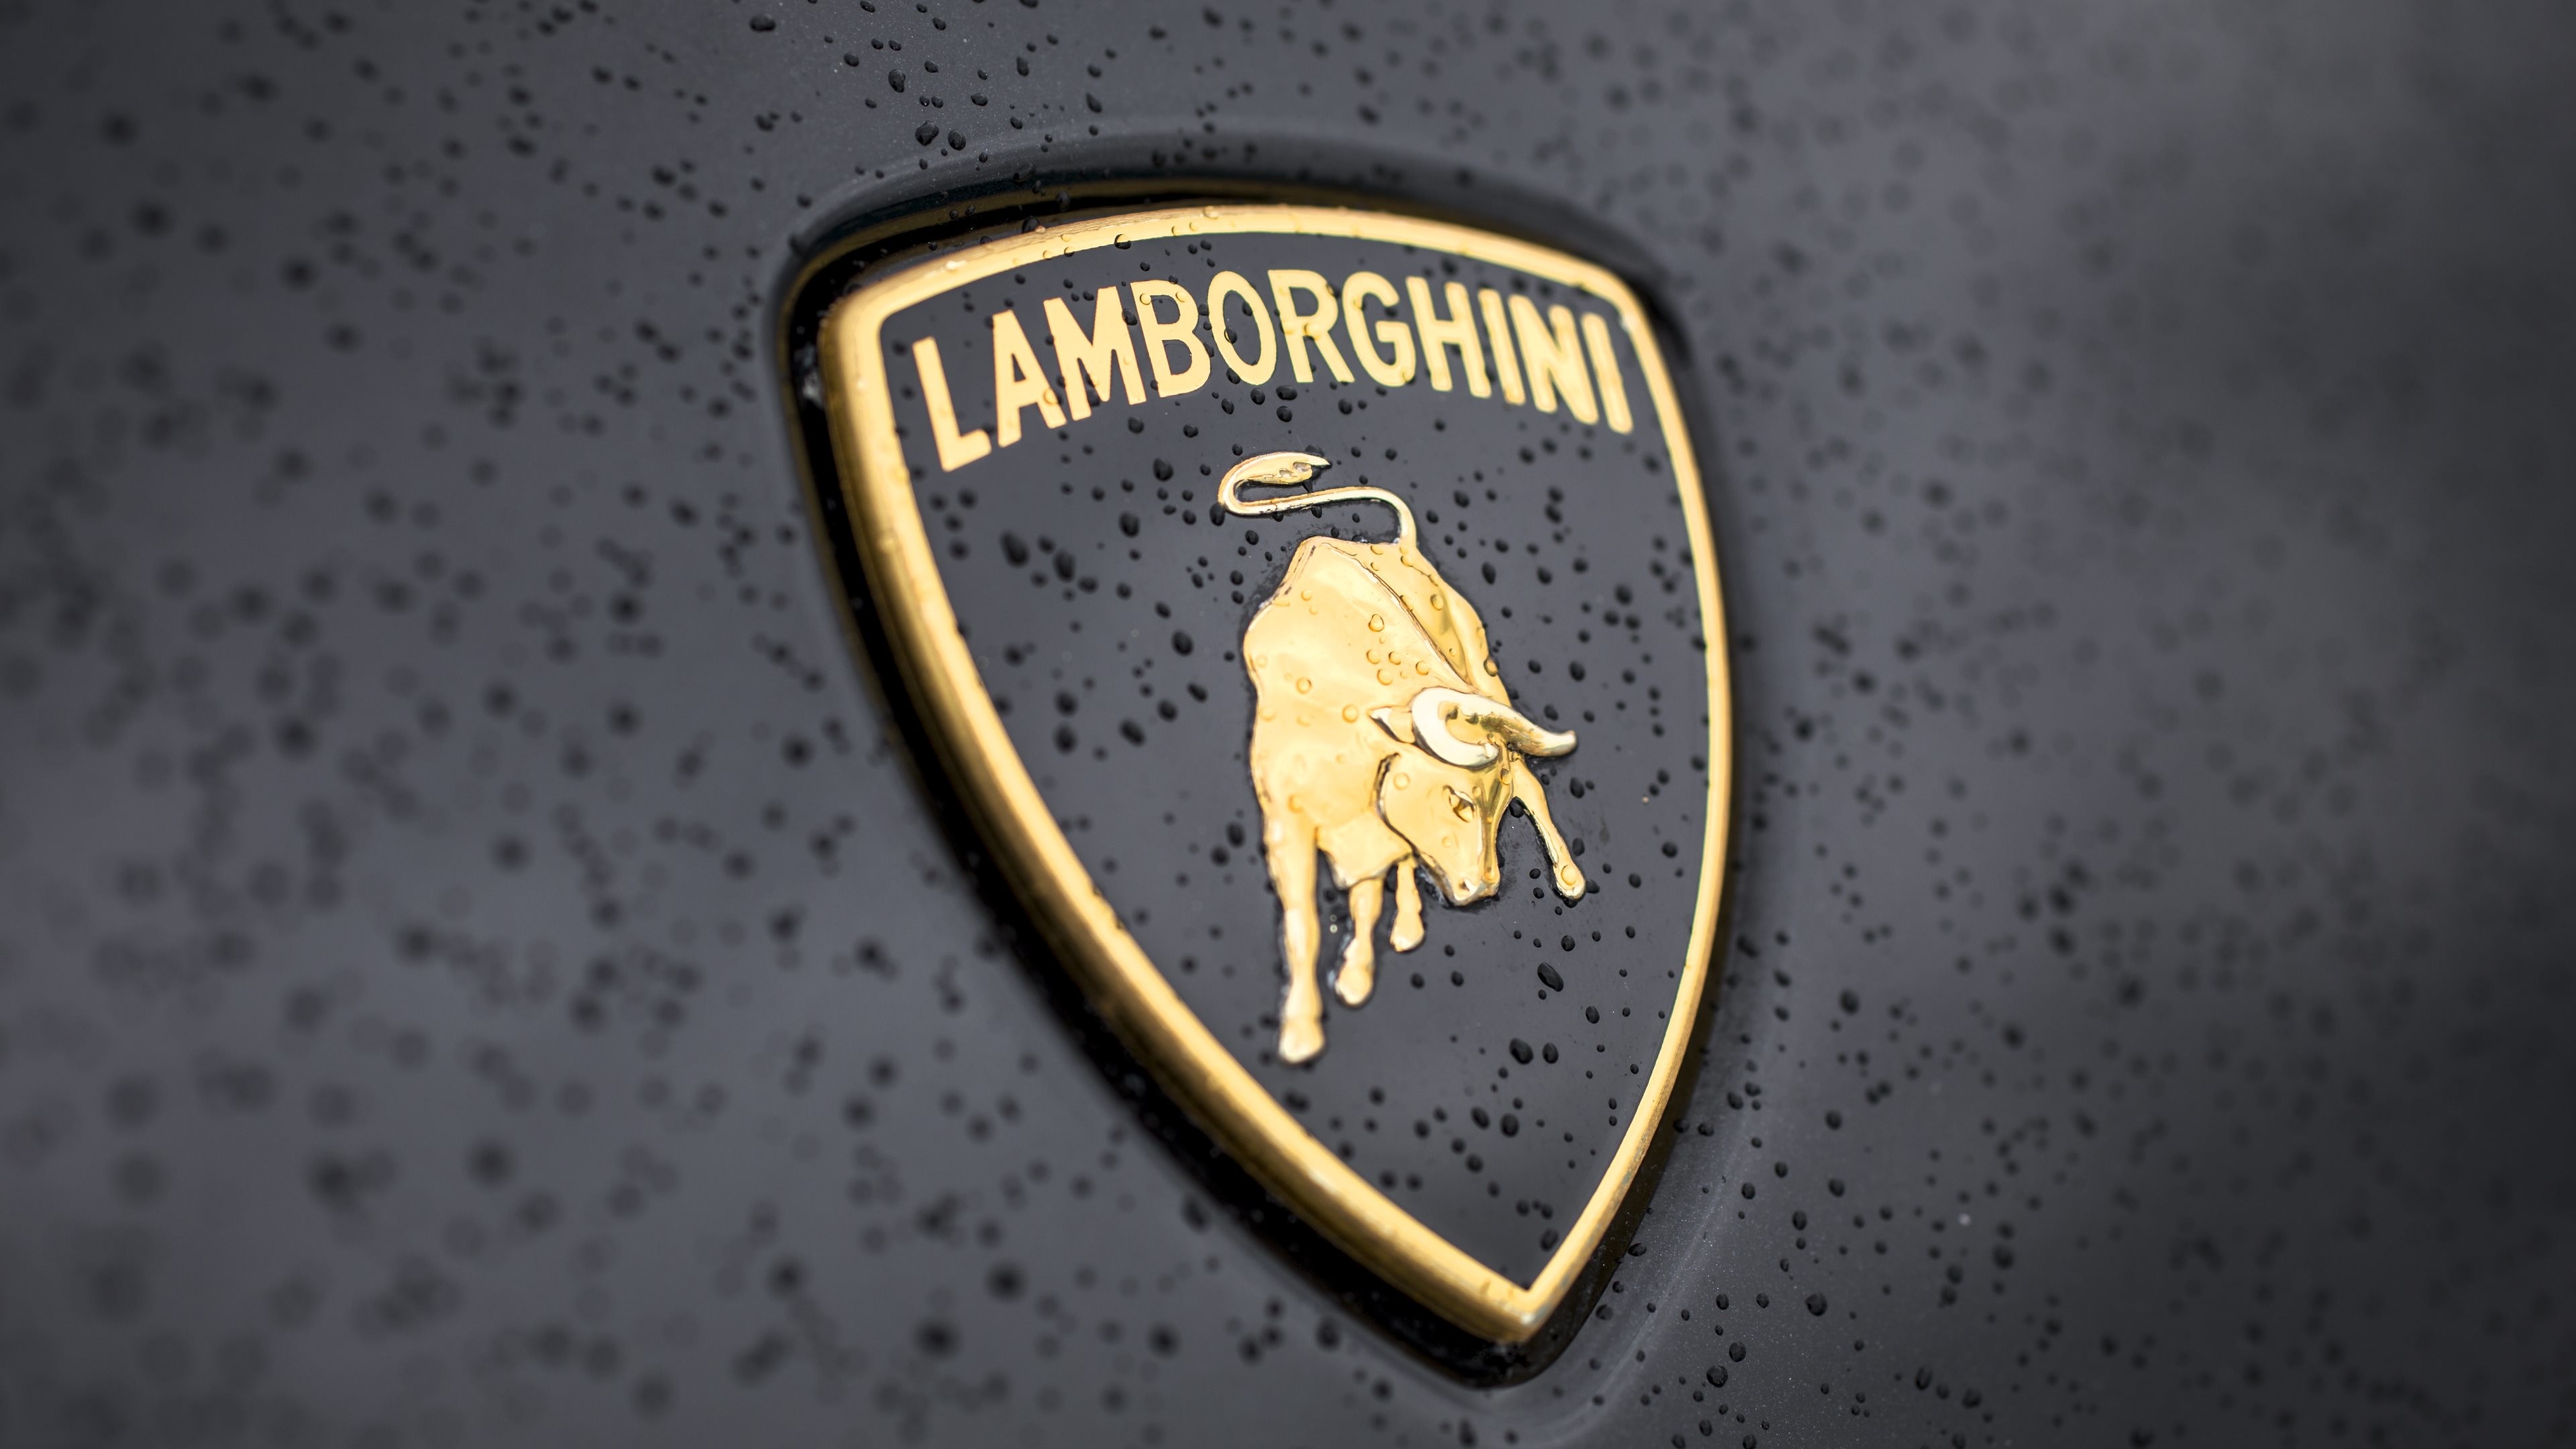 3840x2160 Lamborghini logo wallpaper HD download.